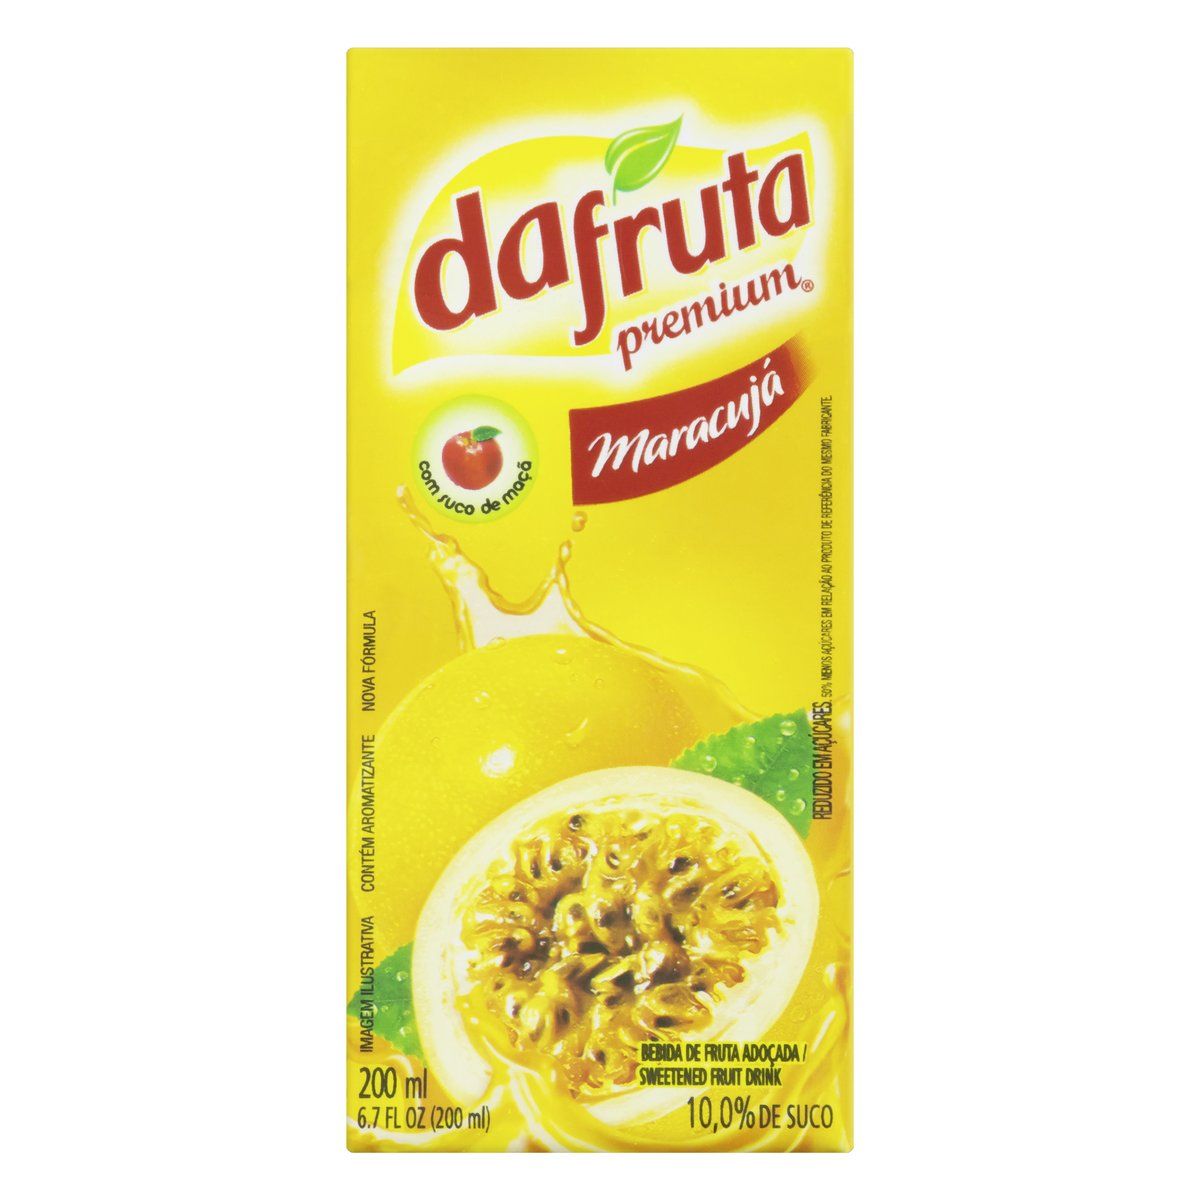 Bebida Adoçada Maracujá Dafruta Premium Caixa 200ml